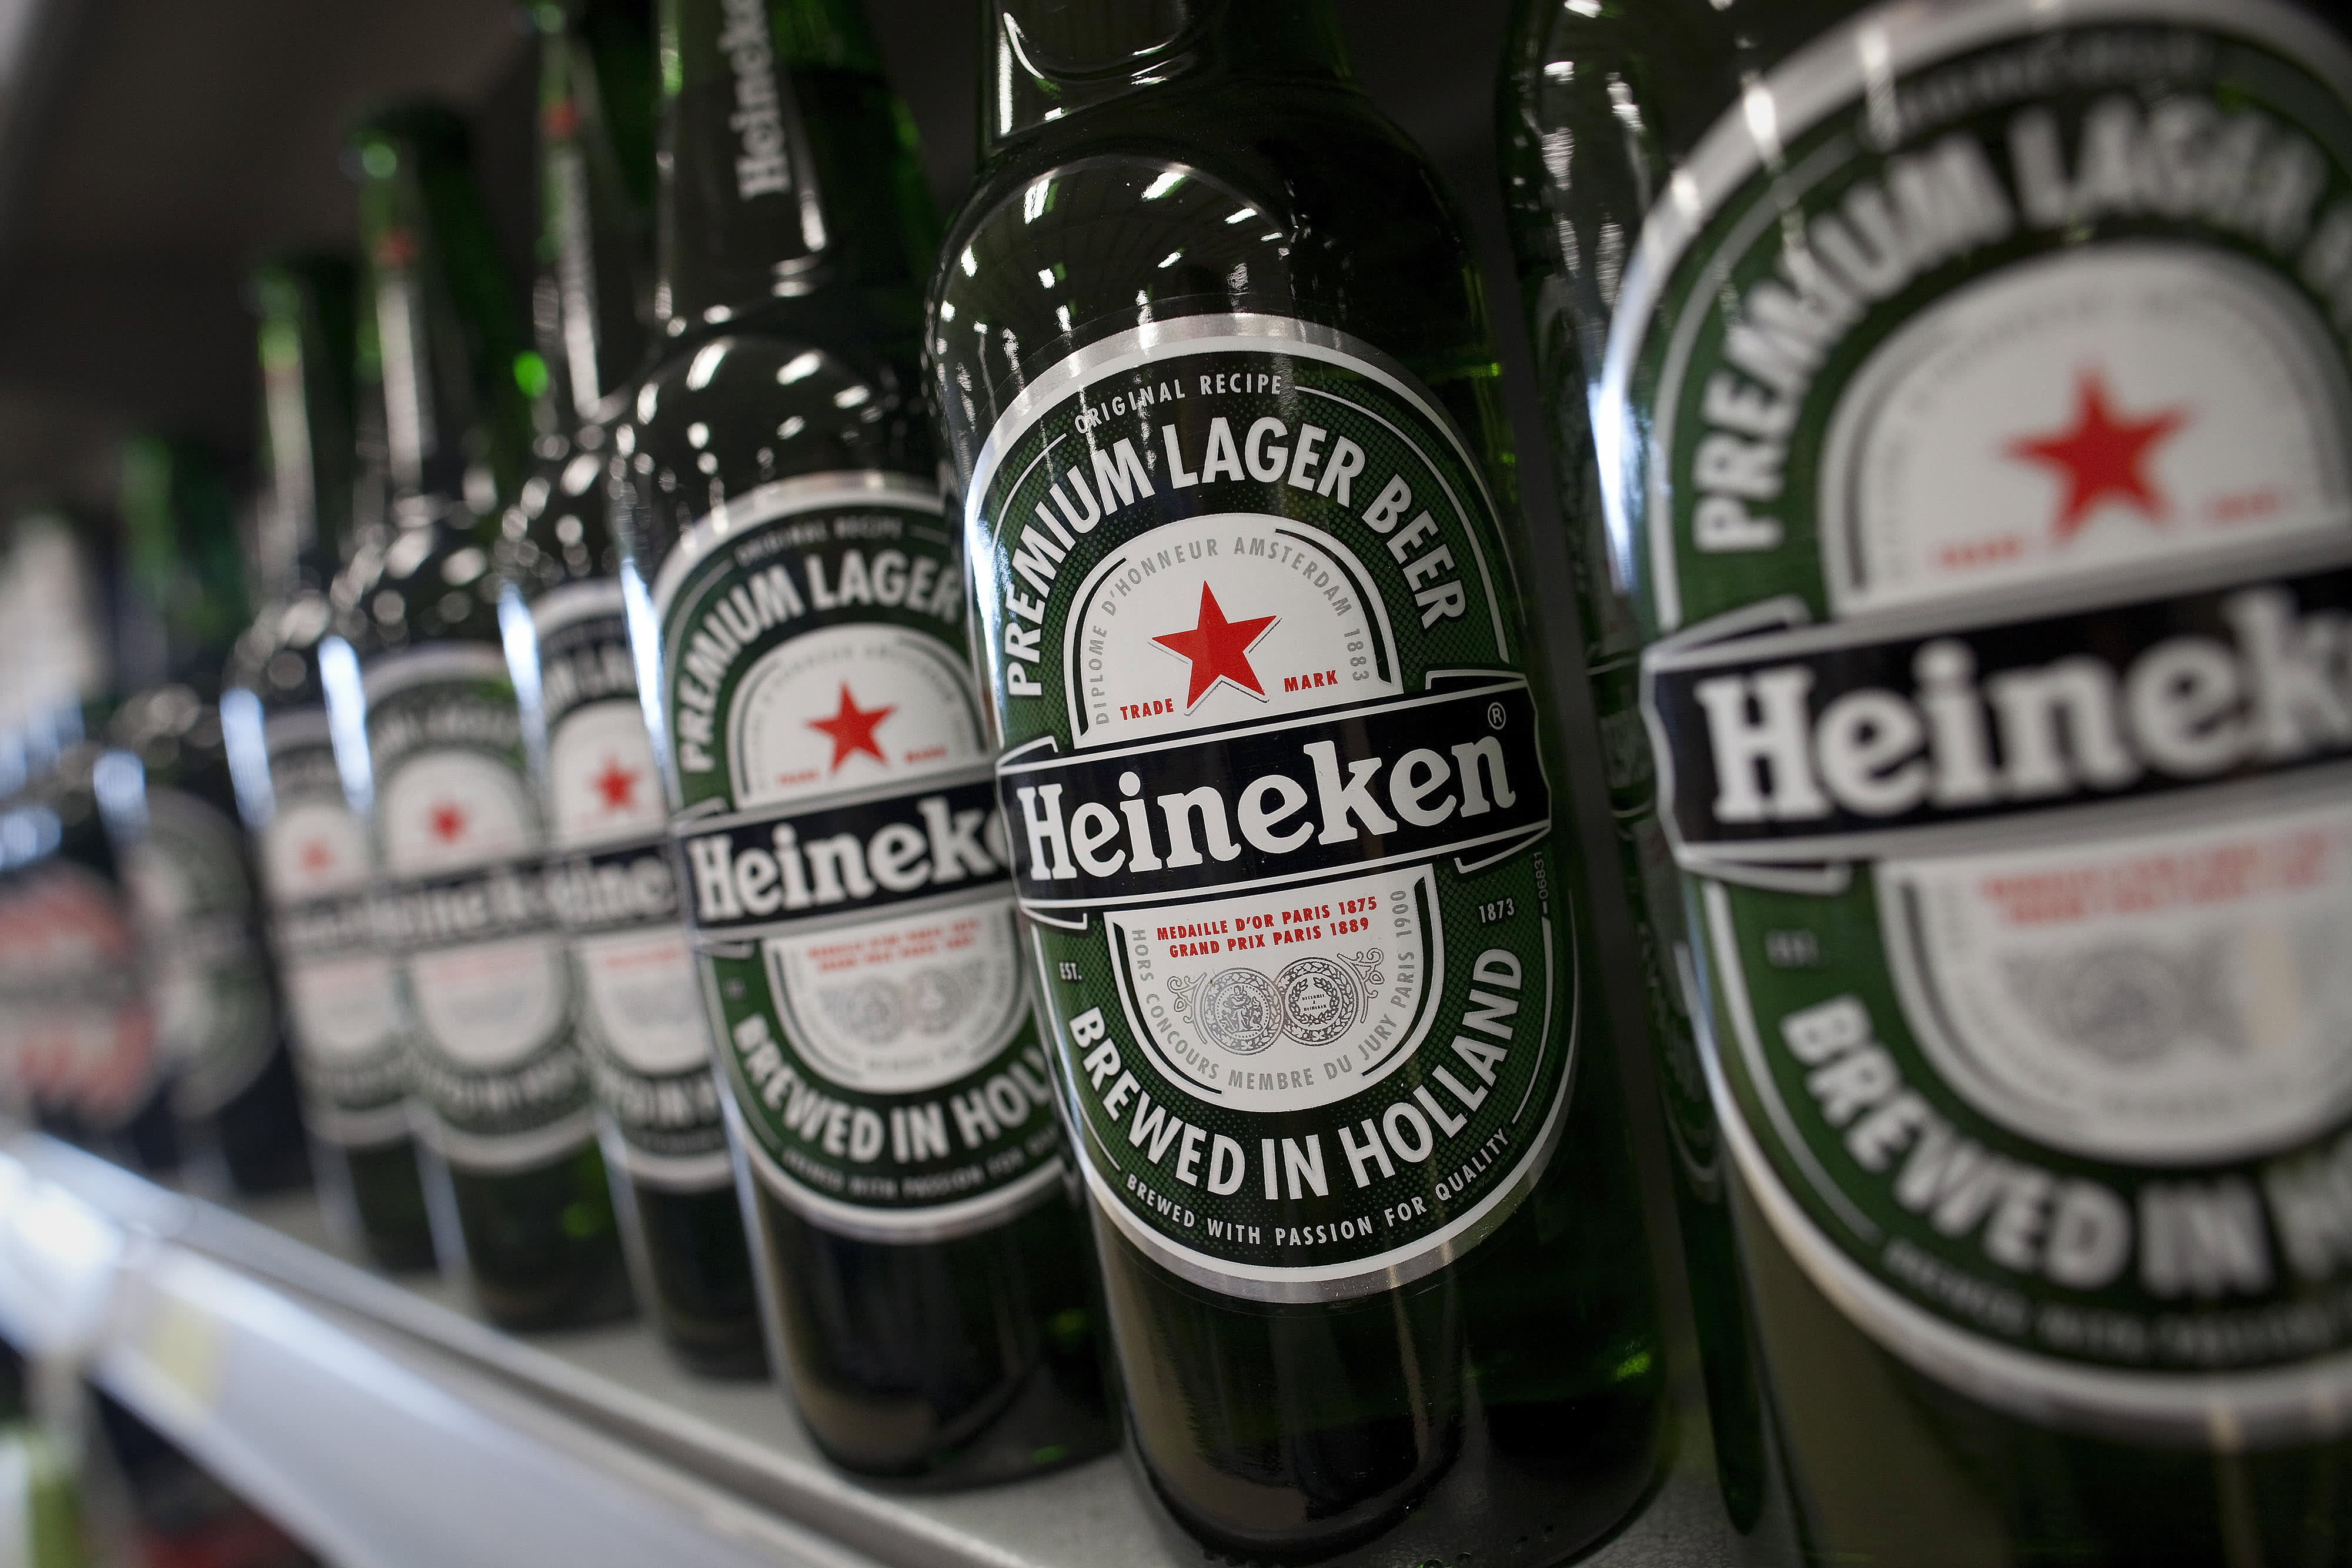 Heineken doubles profit, but warns of rising costs